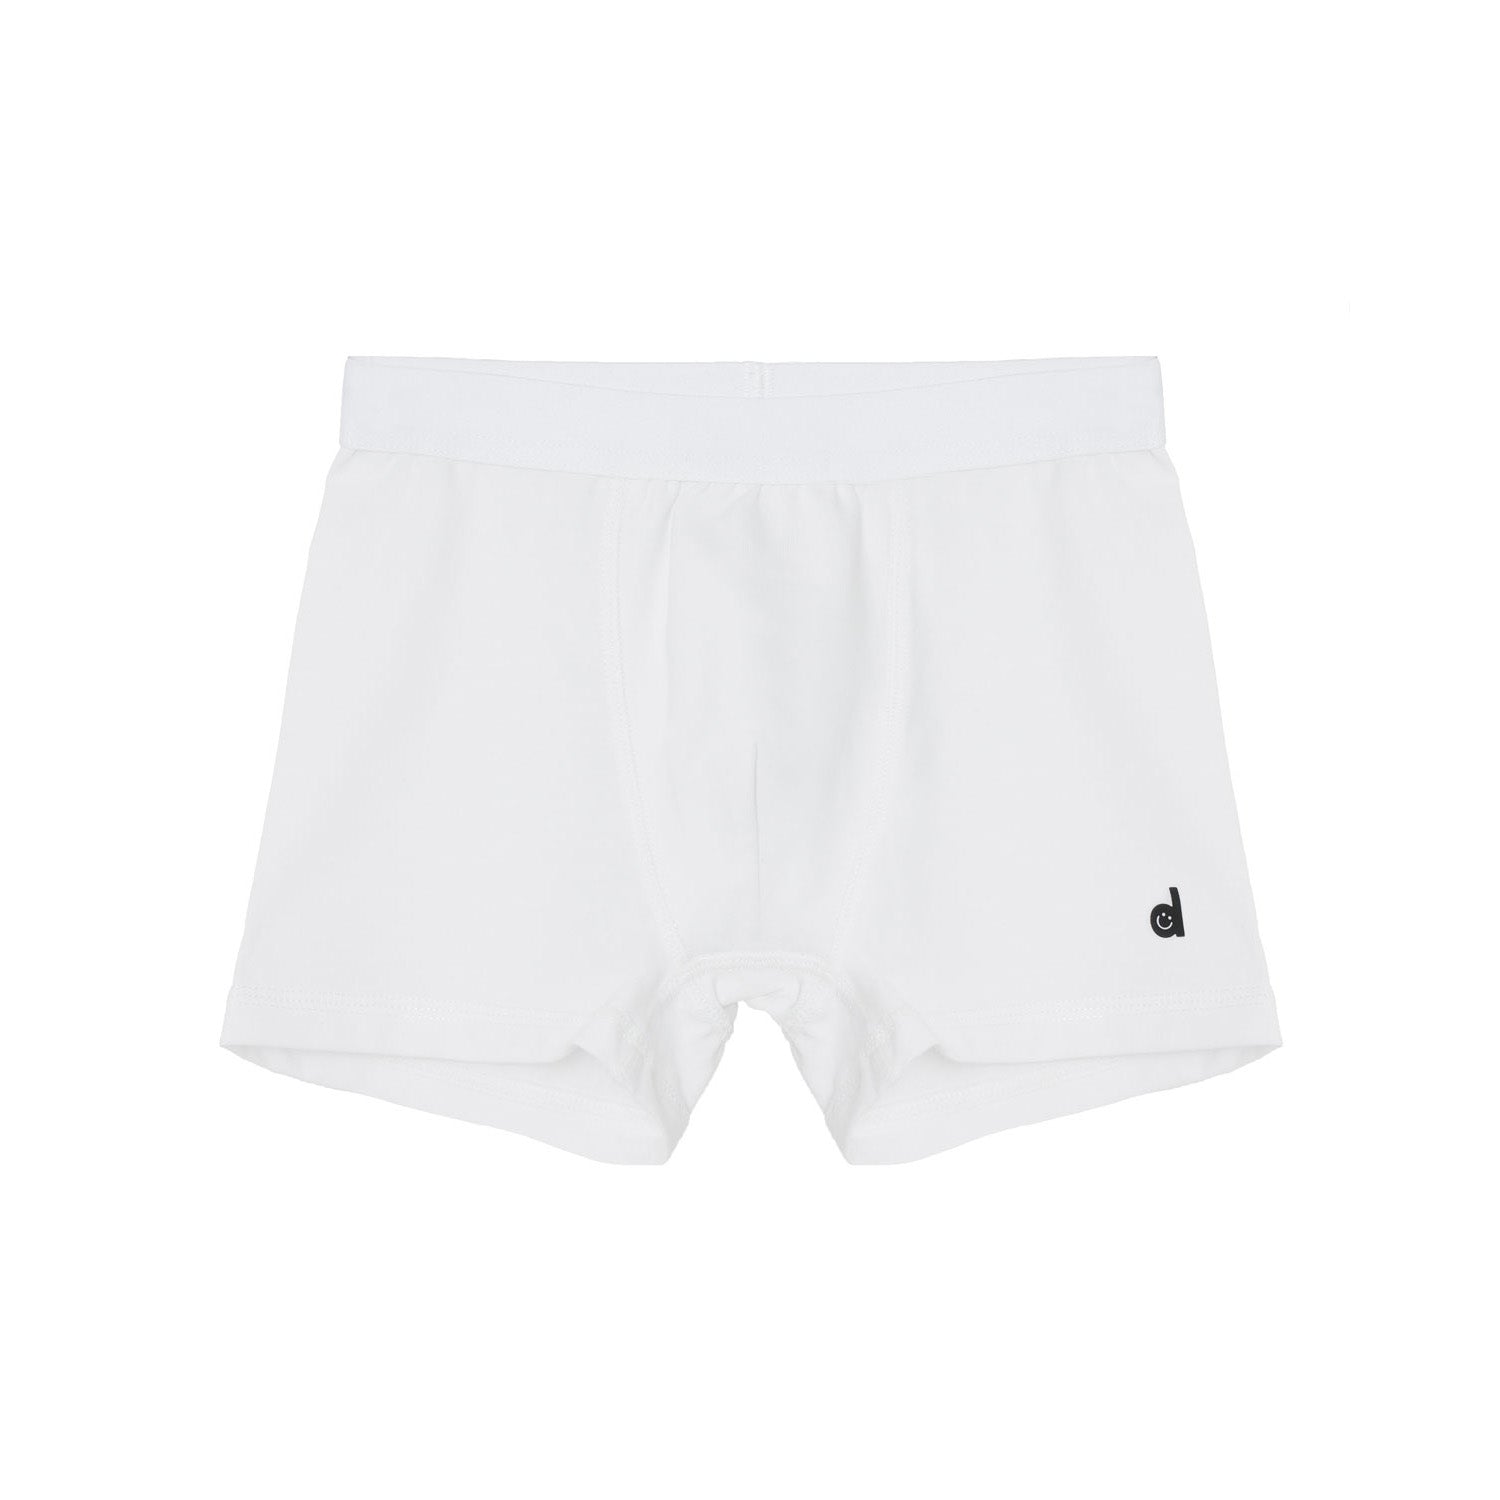 Boys White Underwear – Drawers Clothing